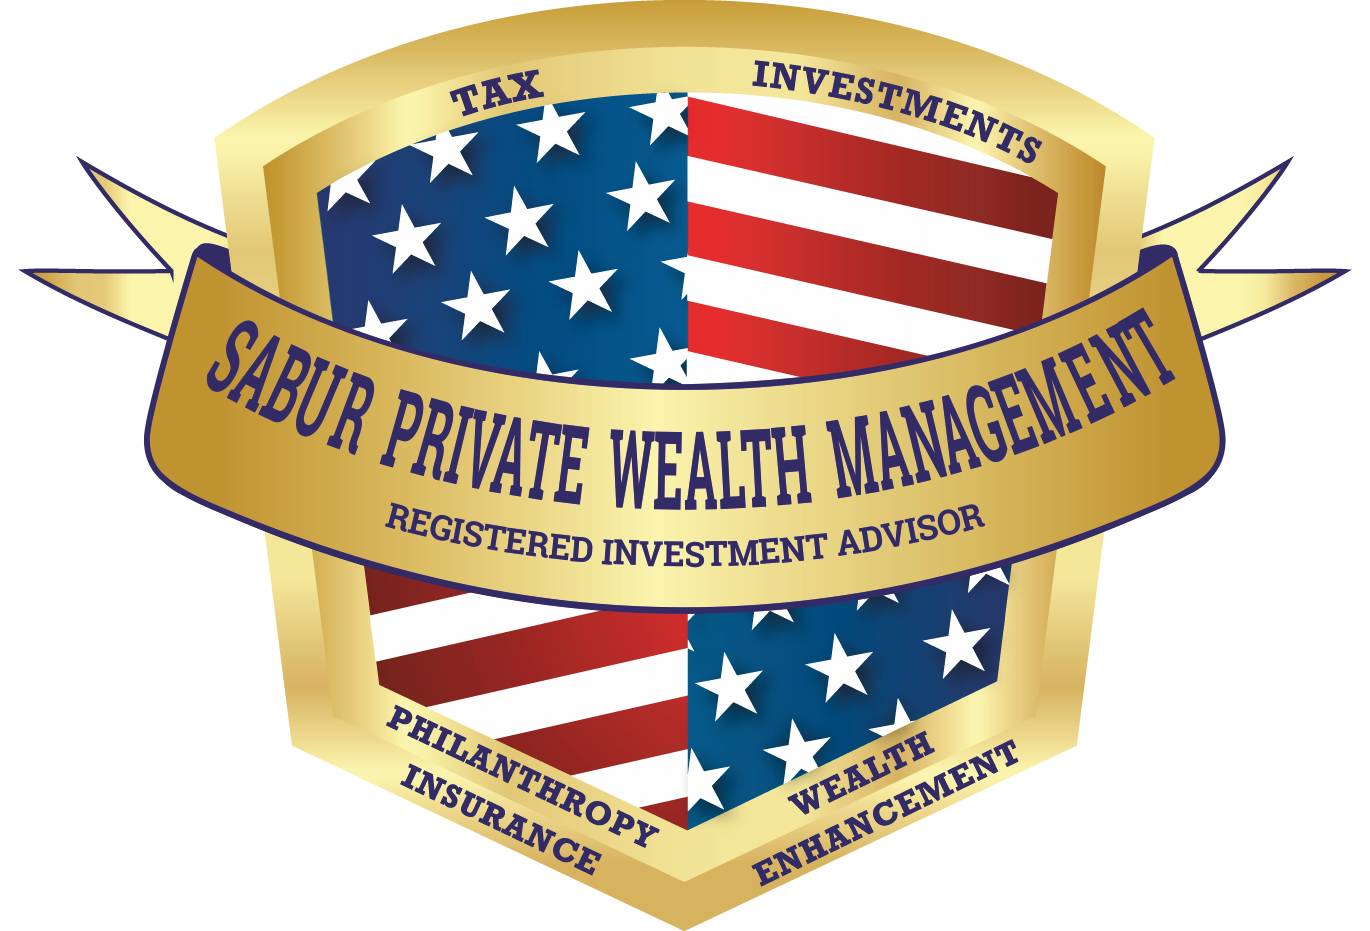 Sabur Private Wealth Management